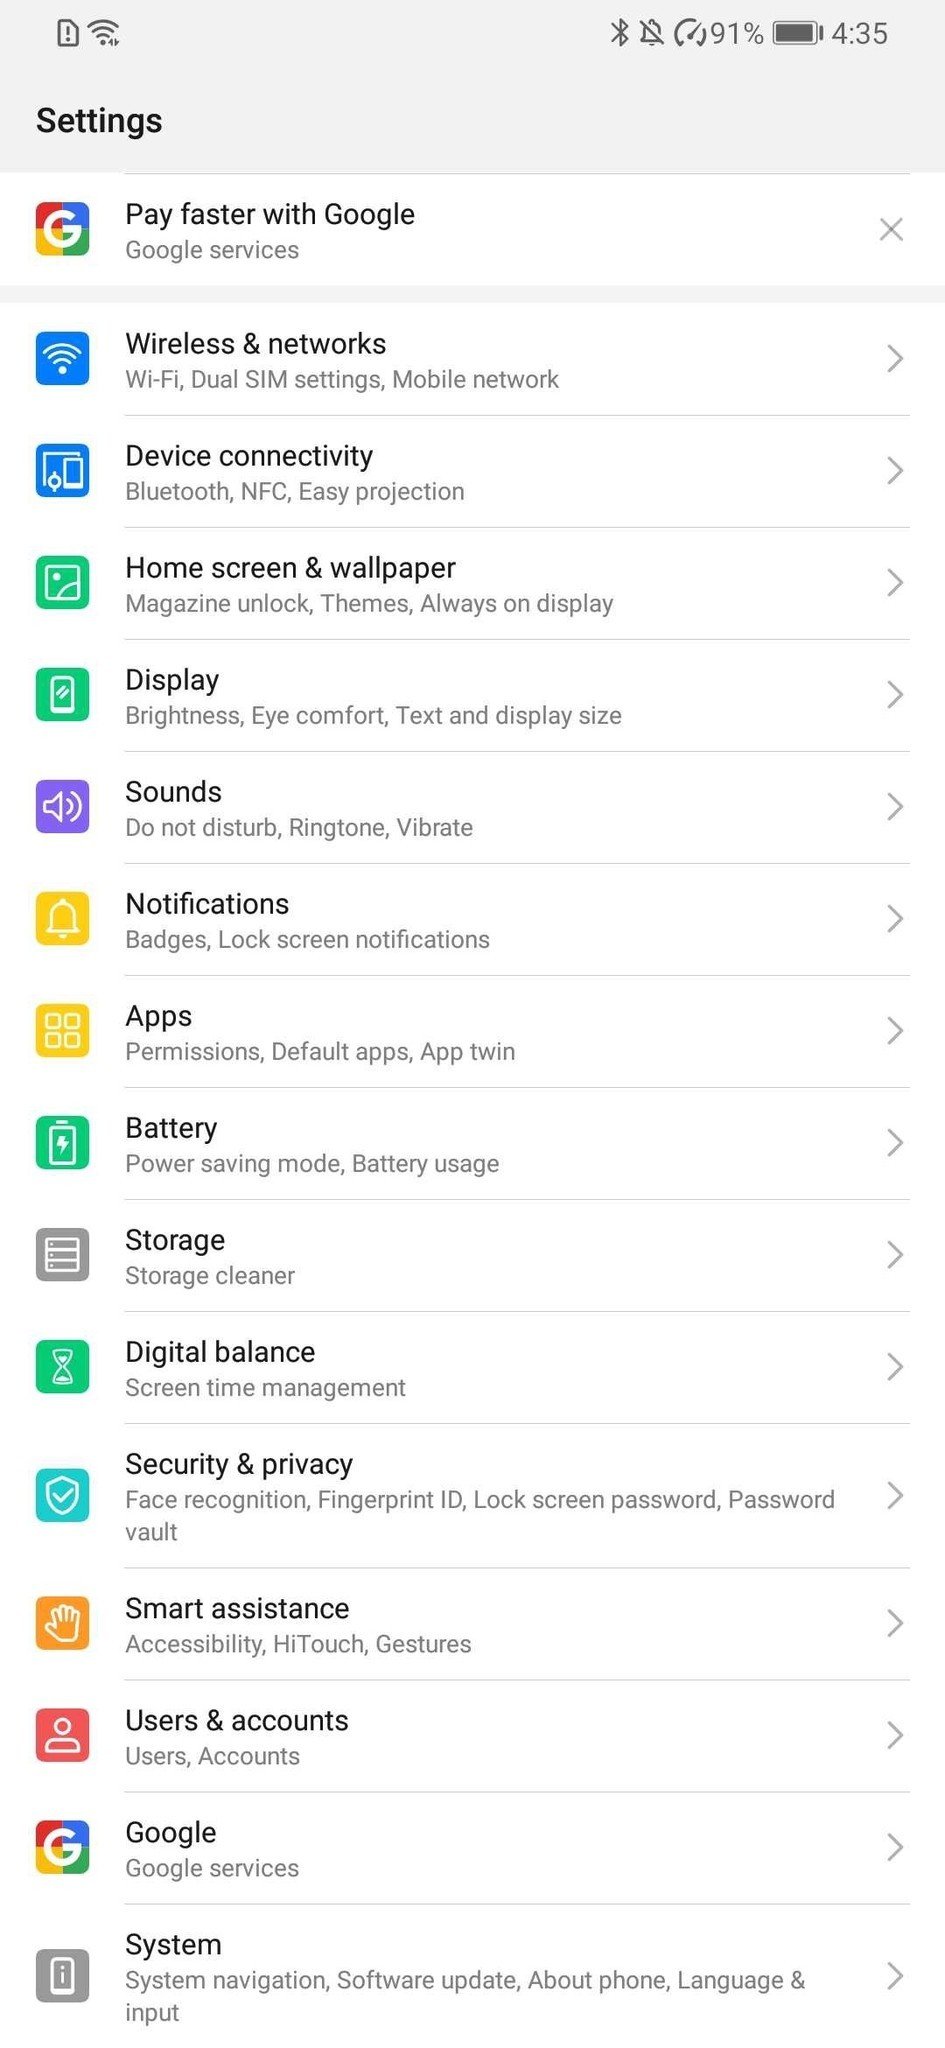 Huawei settings page